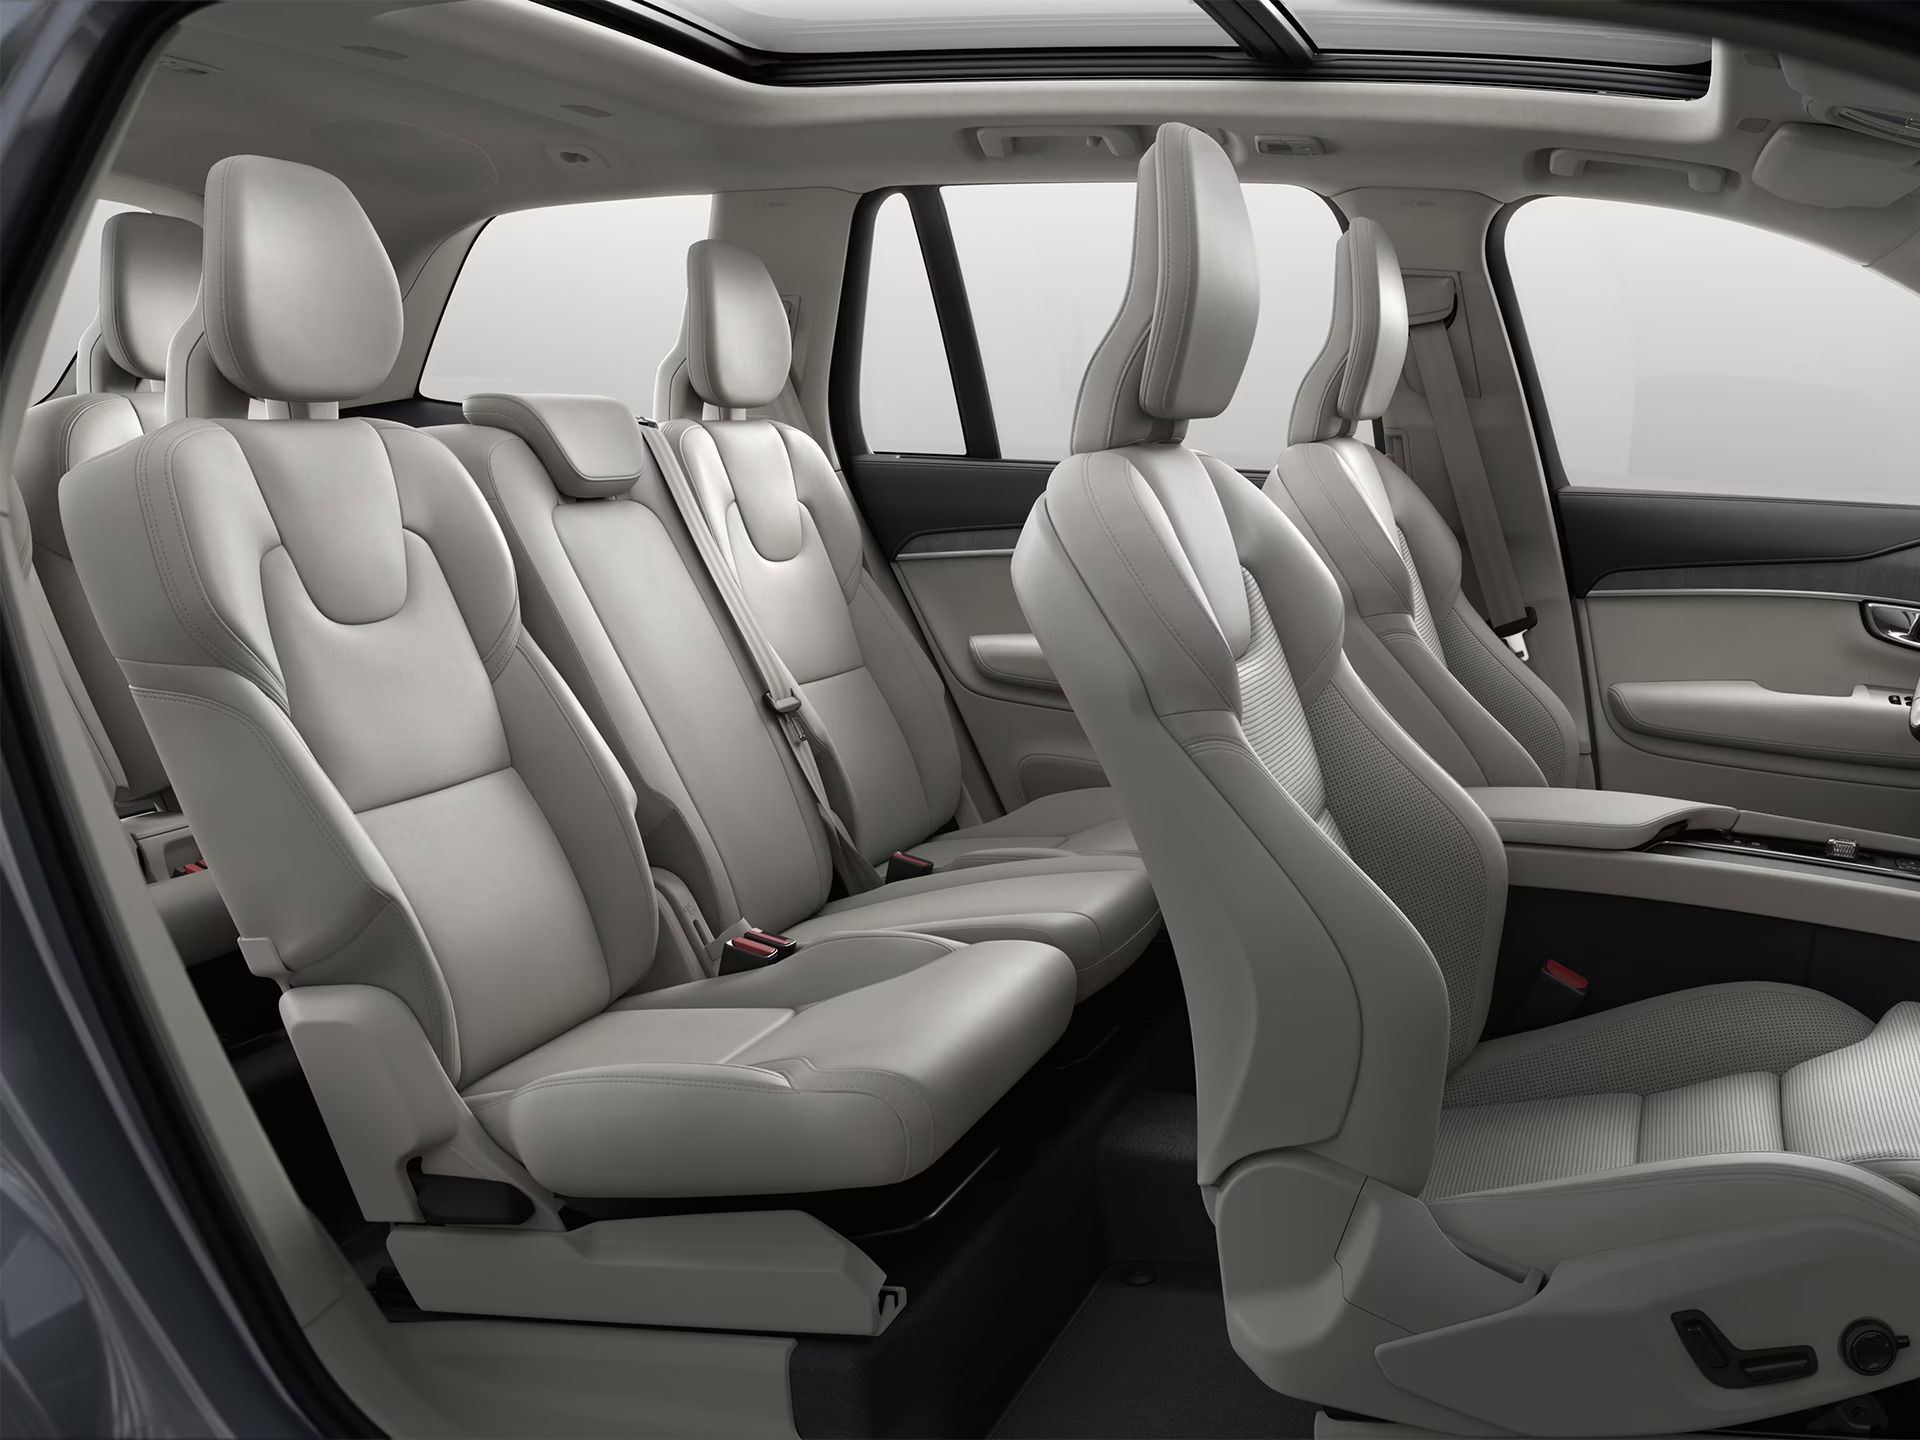 Volvo XC90 interior.